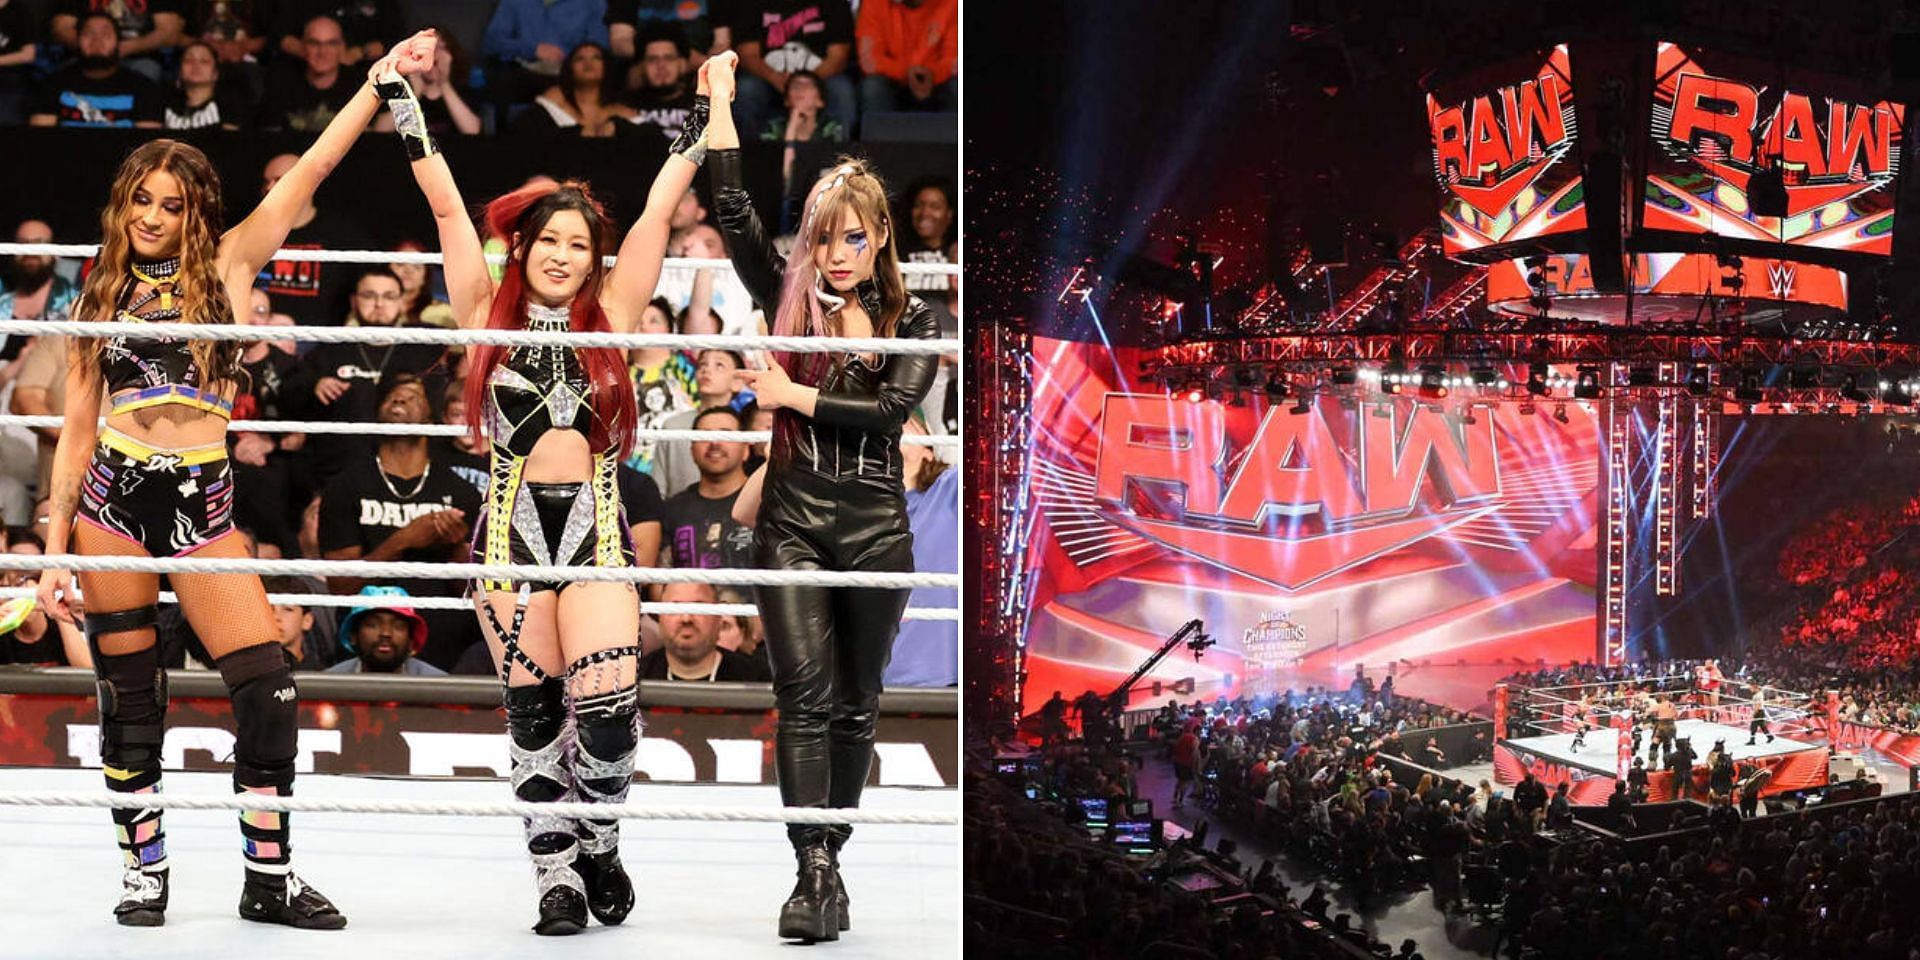 IYO SKY emerged victorious on WWE RAW